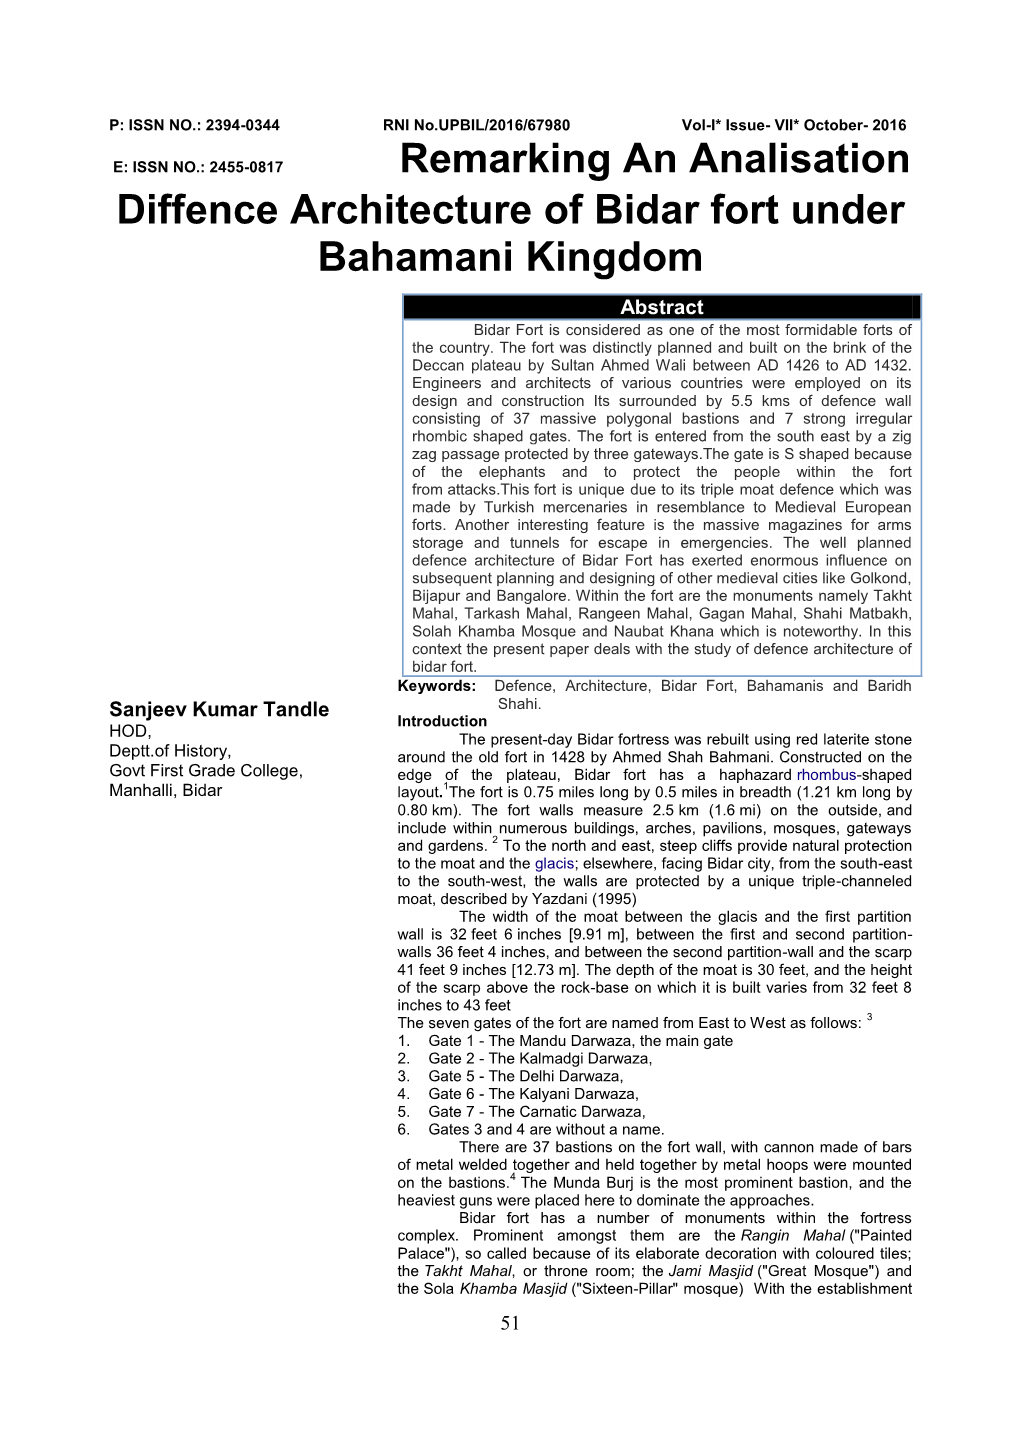 Diffence Architecture of Bidar Fort Under Bahamani Kingdom Sanjeev